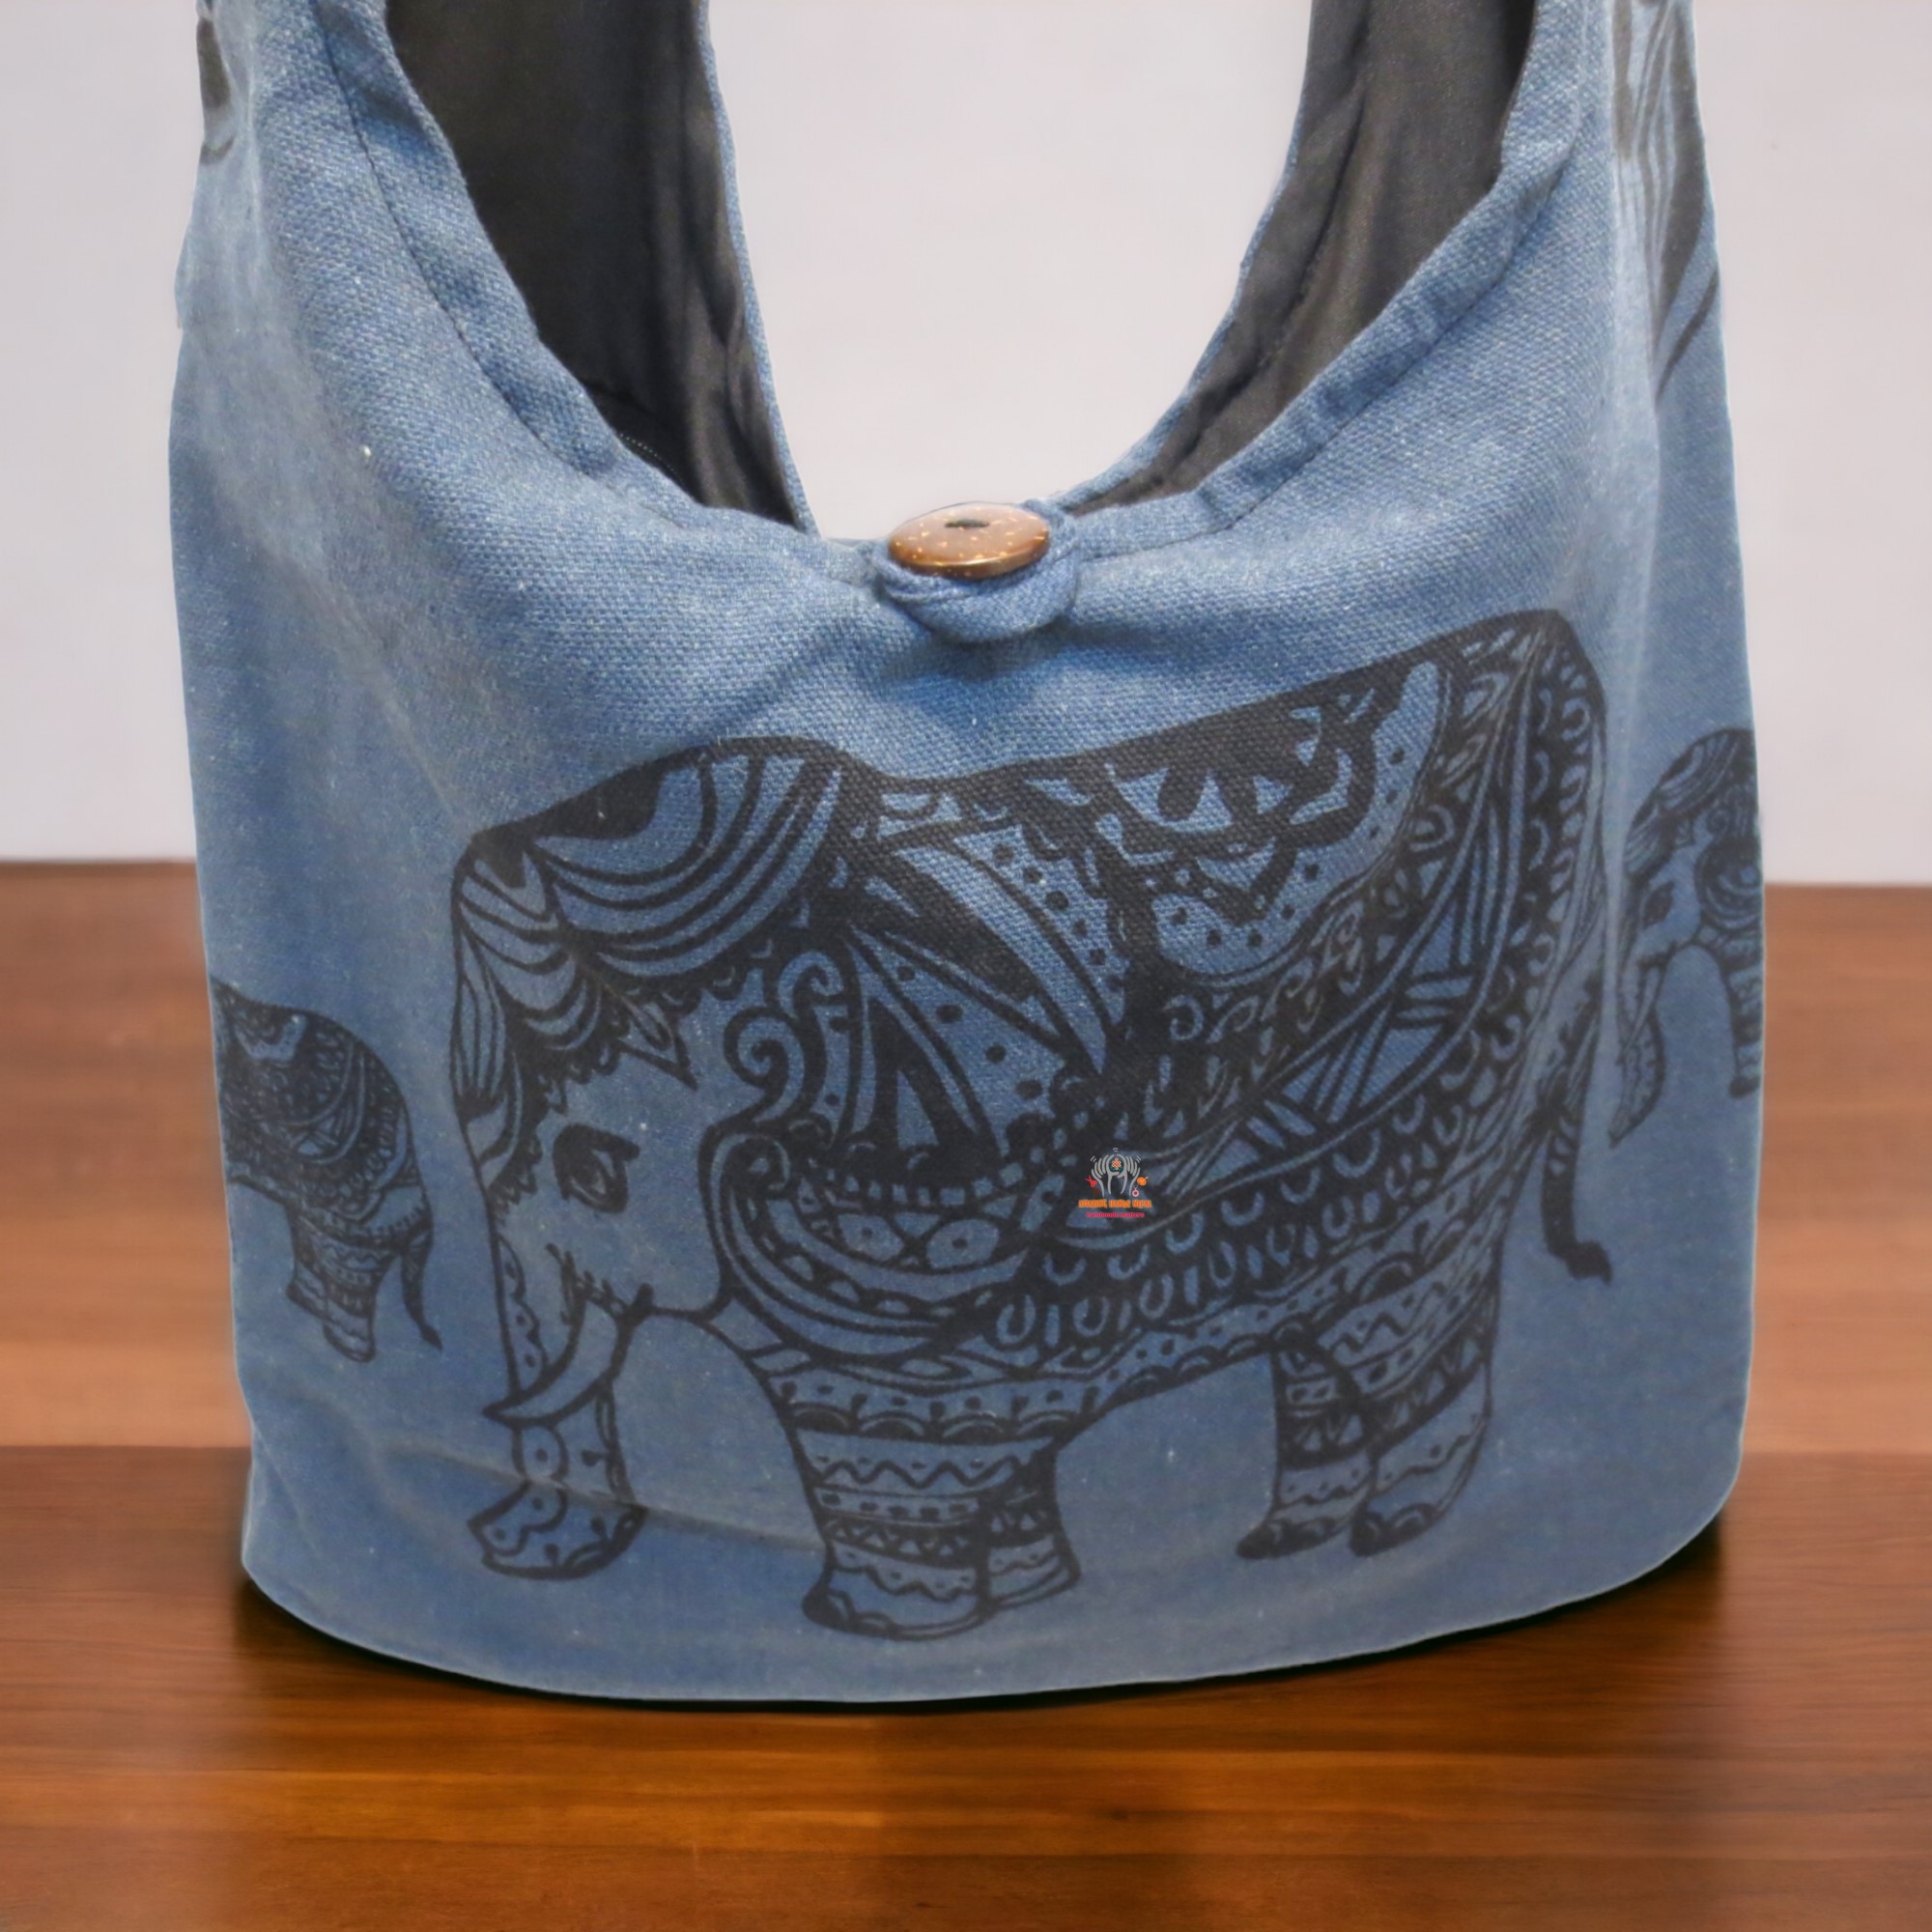 Cotton Shoulder Bag With Elephant Prints